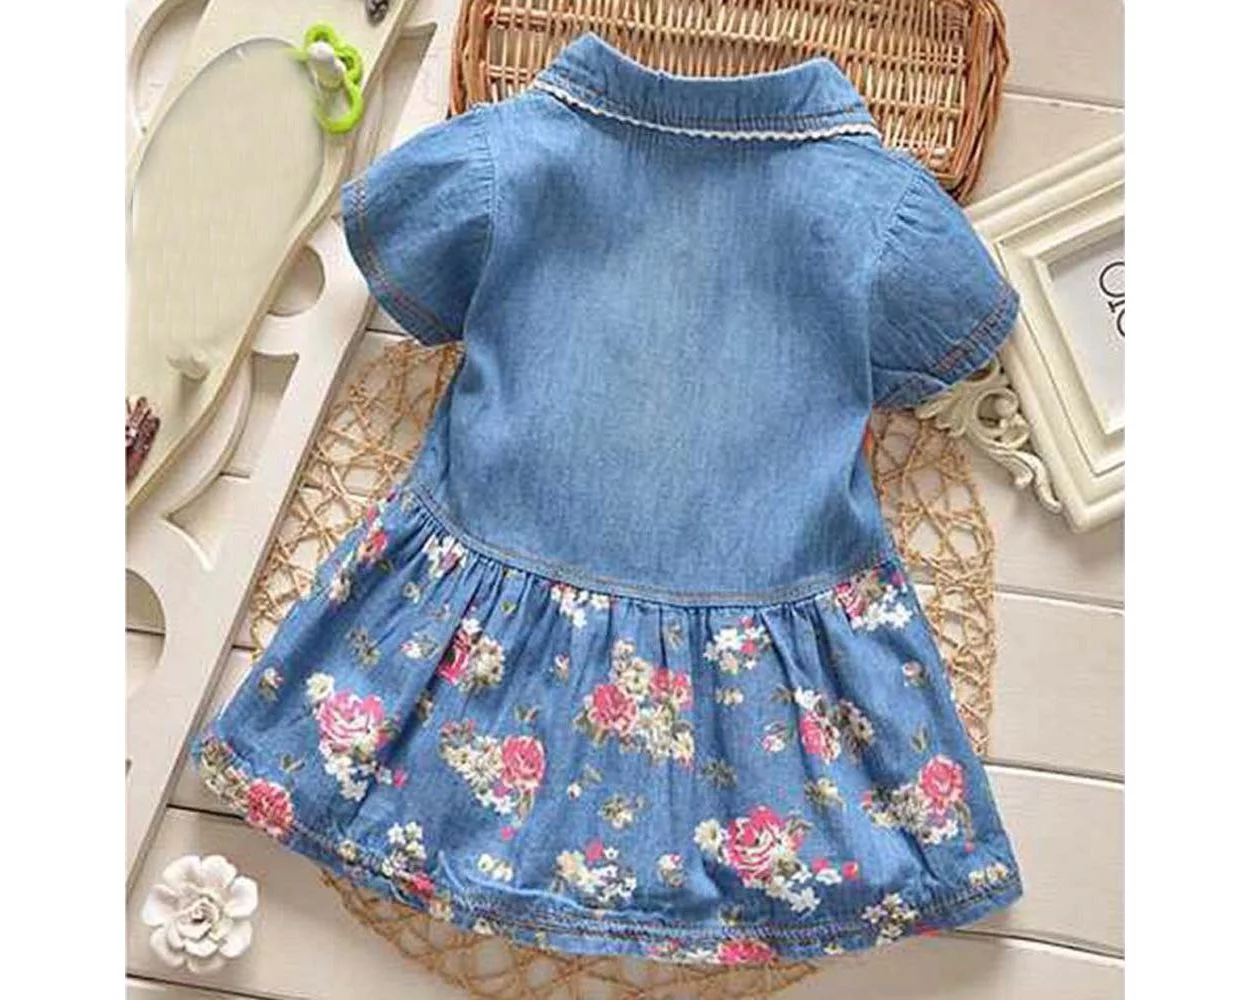 new born baby girl frock 0-3 month handmade soft wool knitting Fashionable  dress | eBay